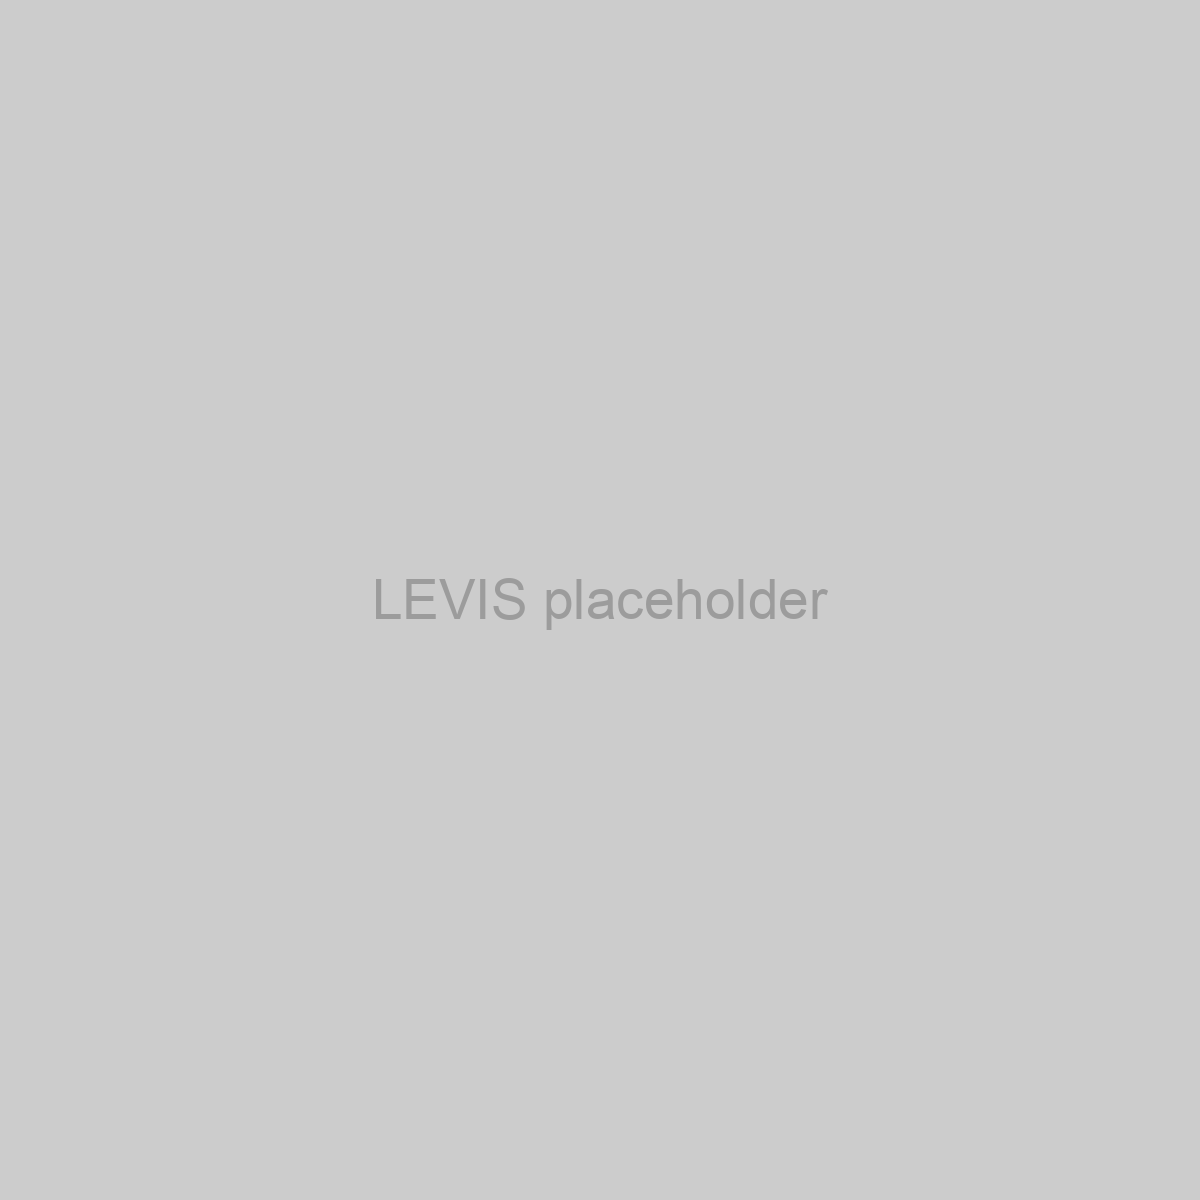 LEVIS Placeholder Image